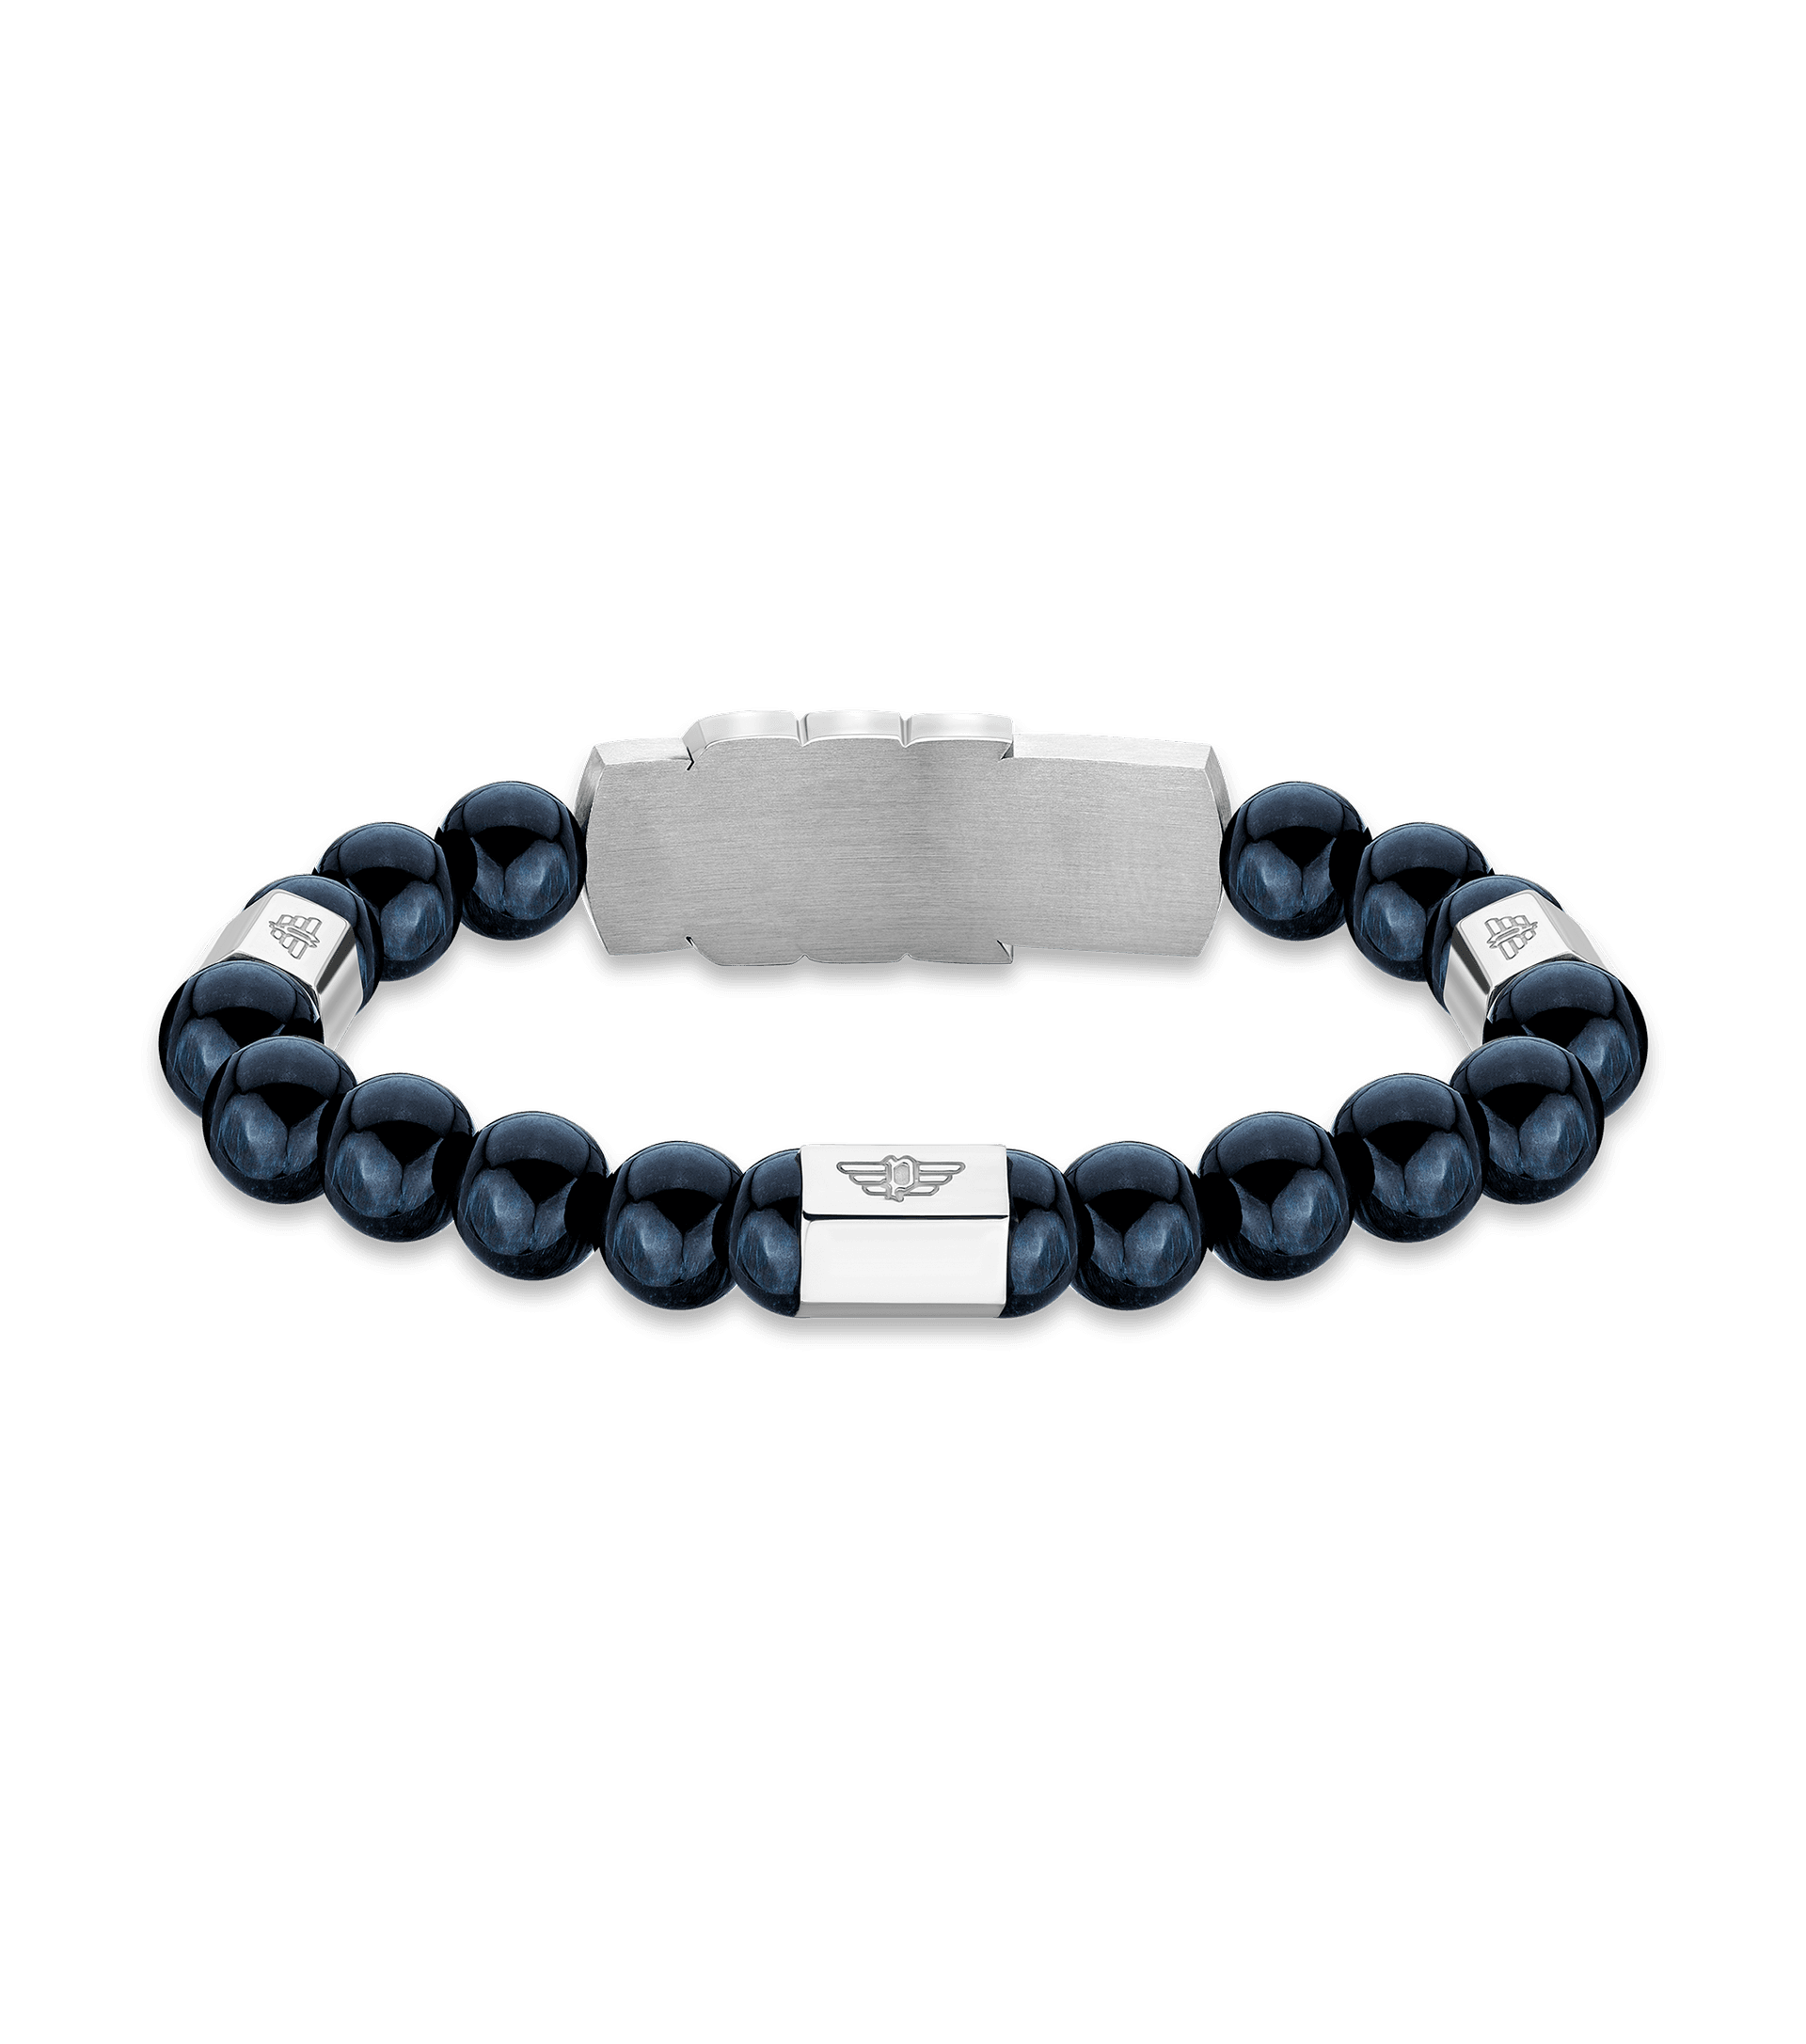 Police jewels - Valorious Armband Von PEAGB2120322 Für Police Männer